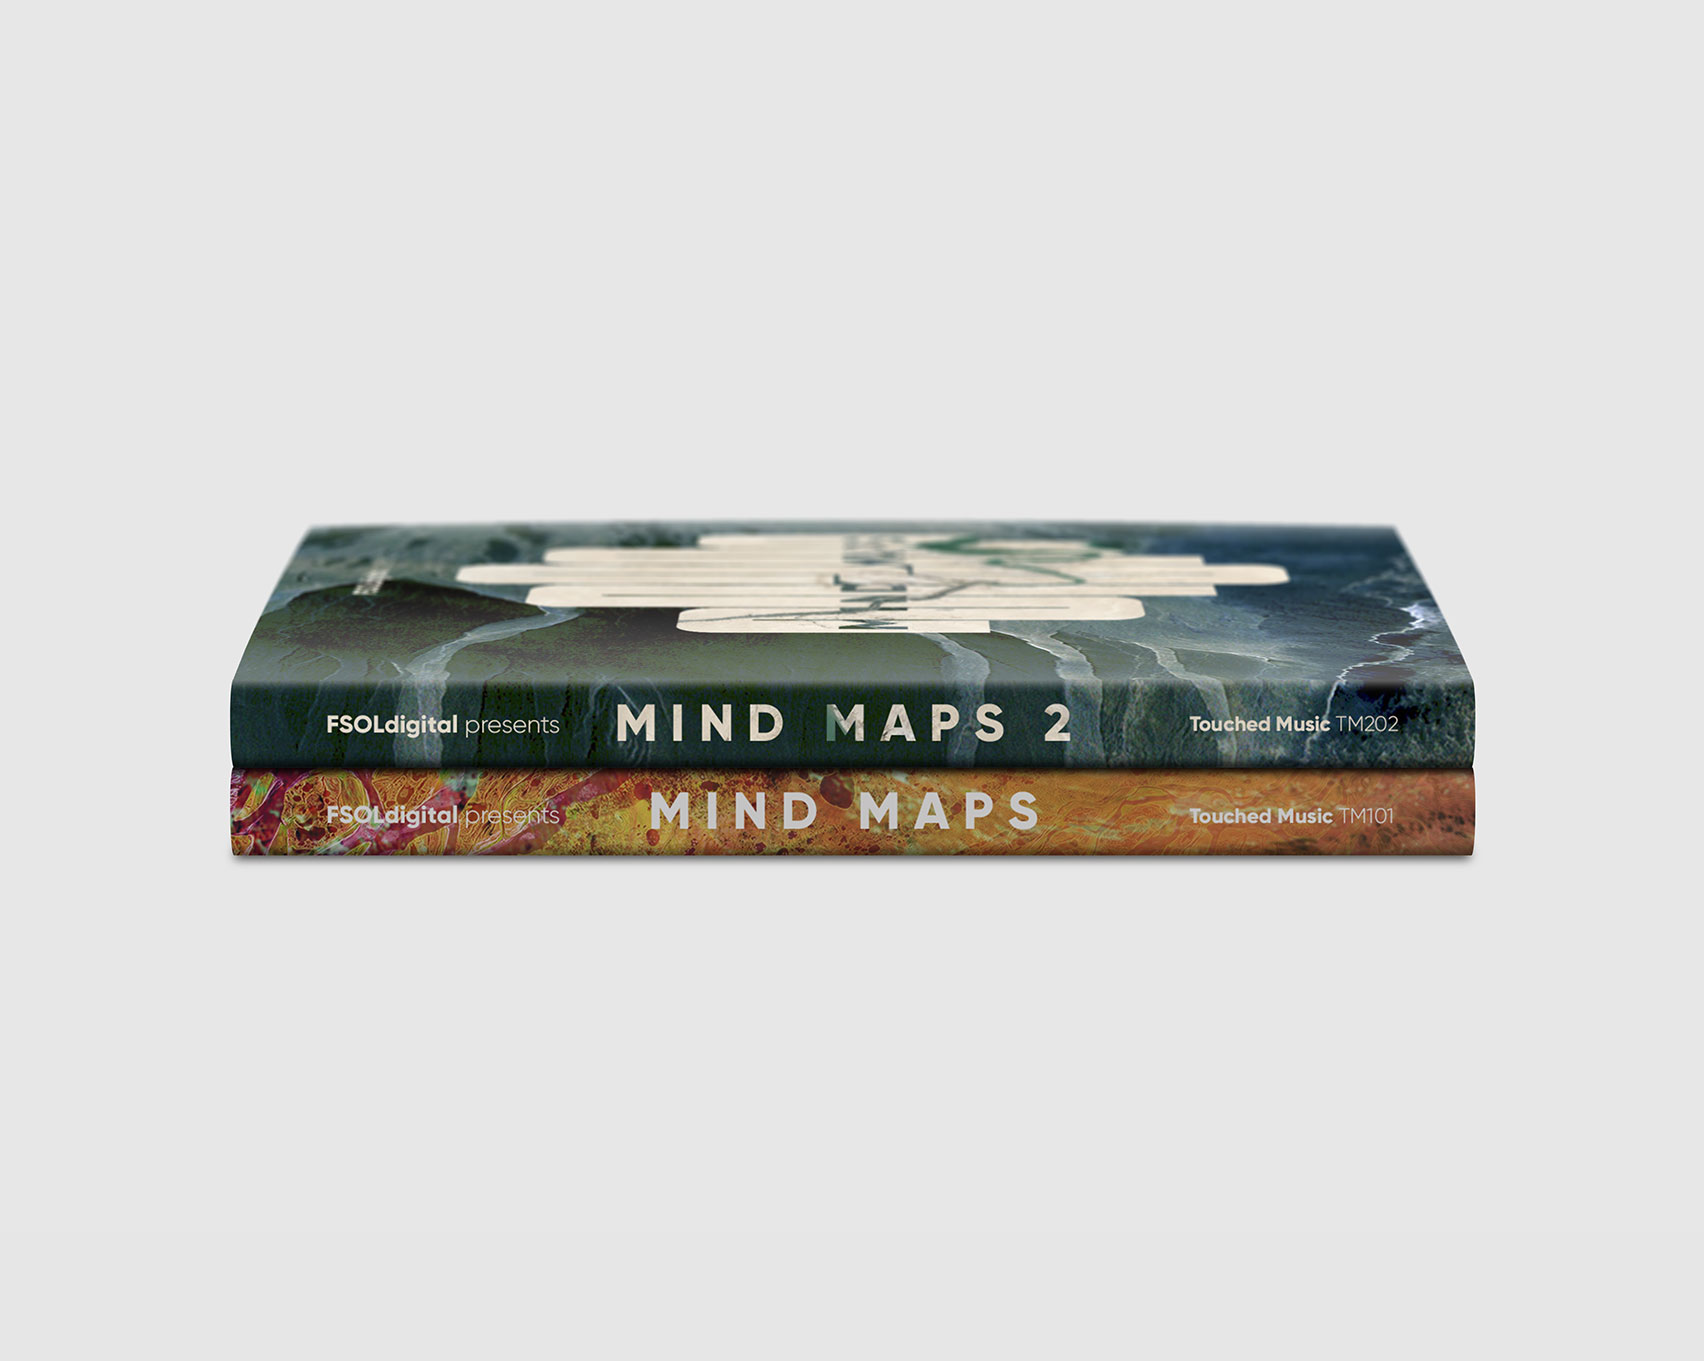 Mind Maps and Mind Maps 2